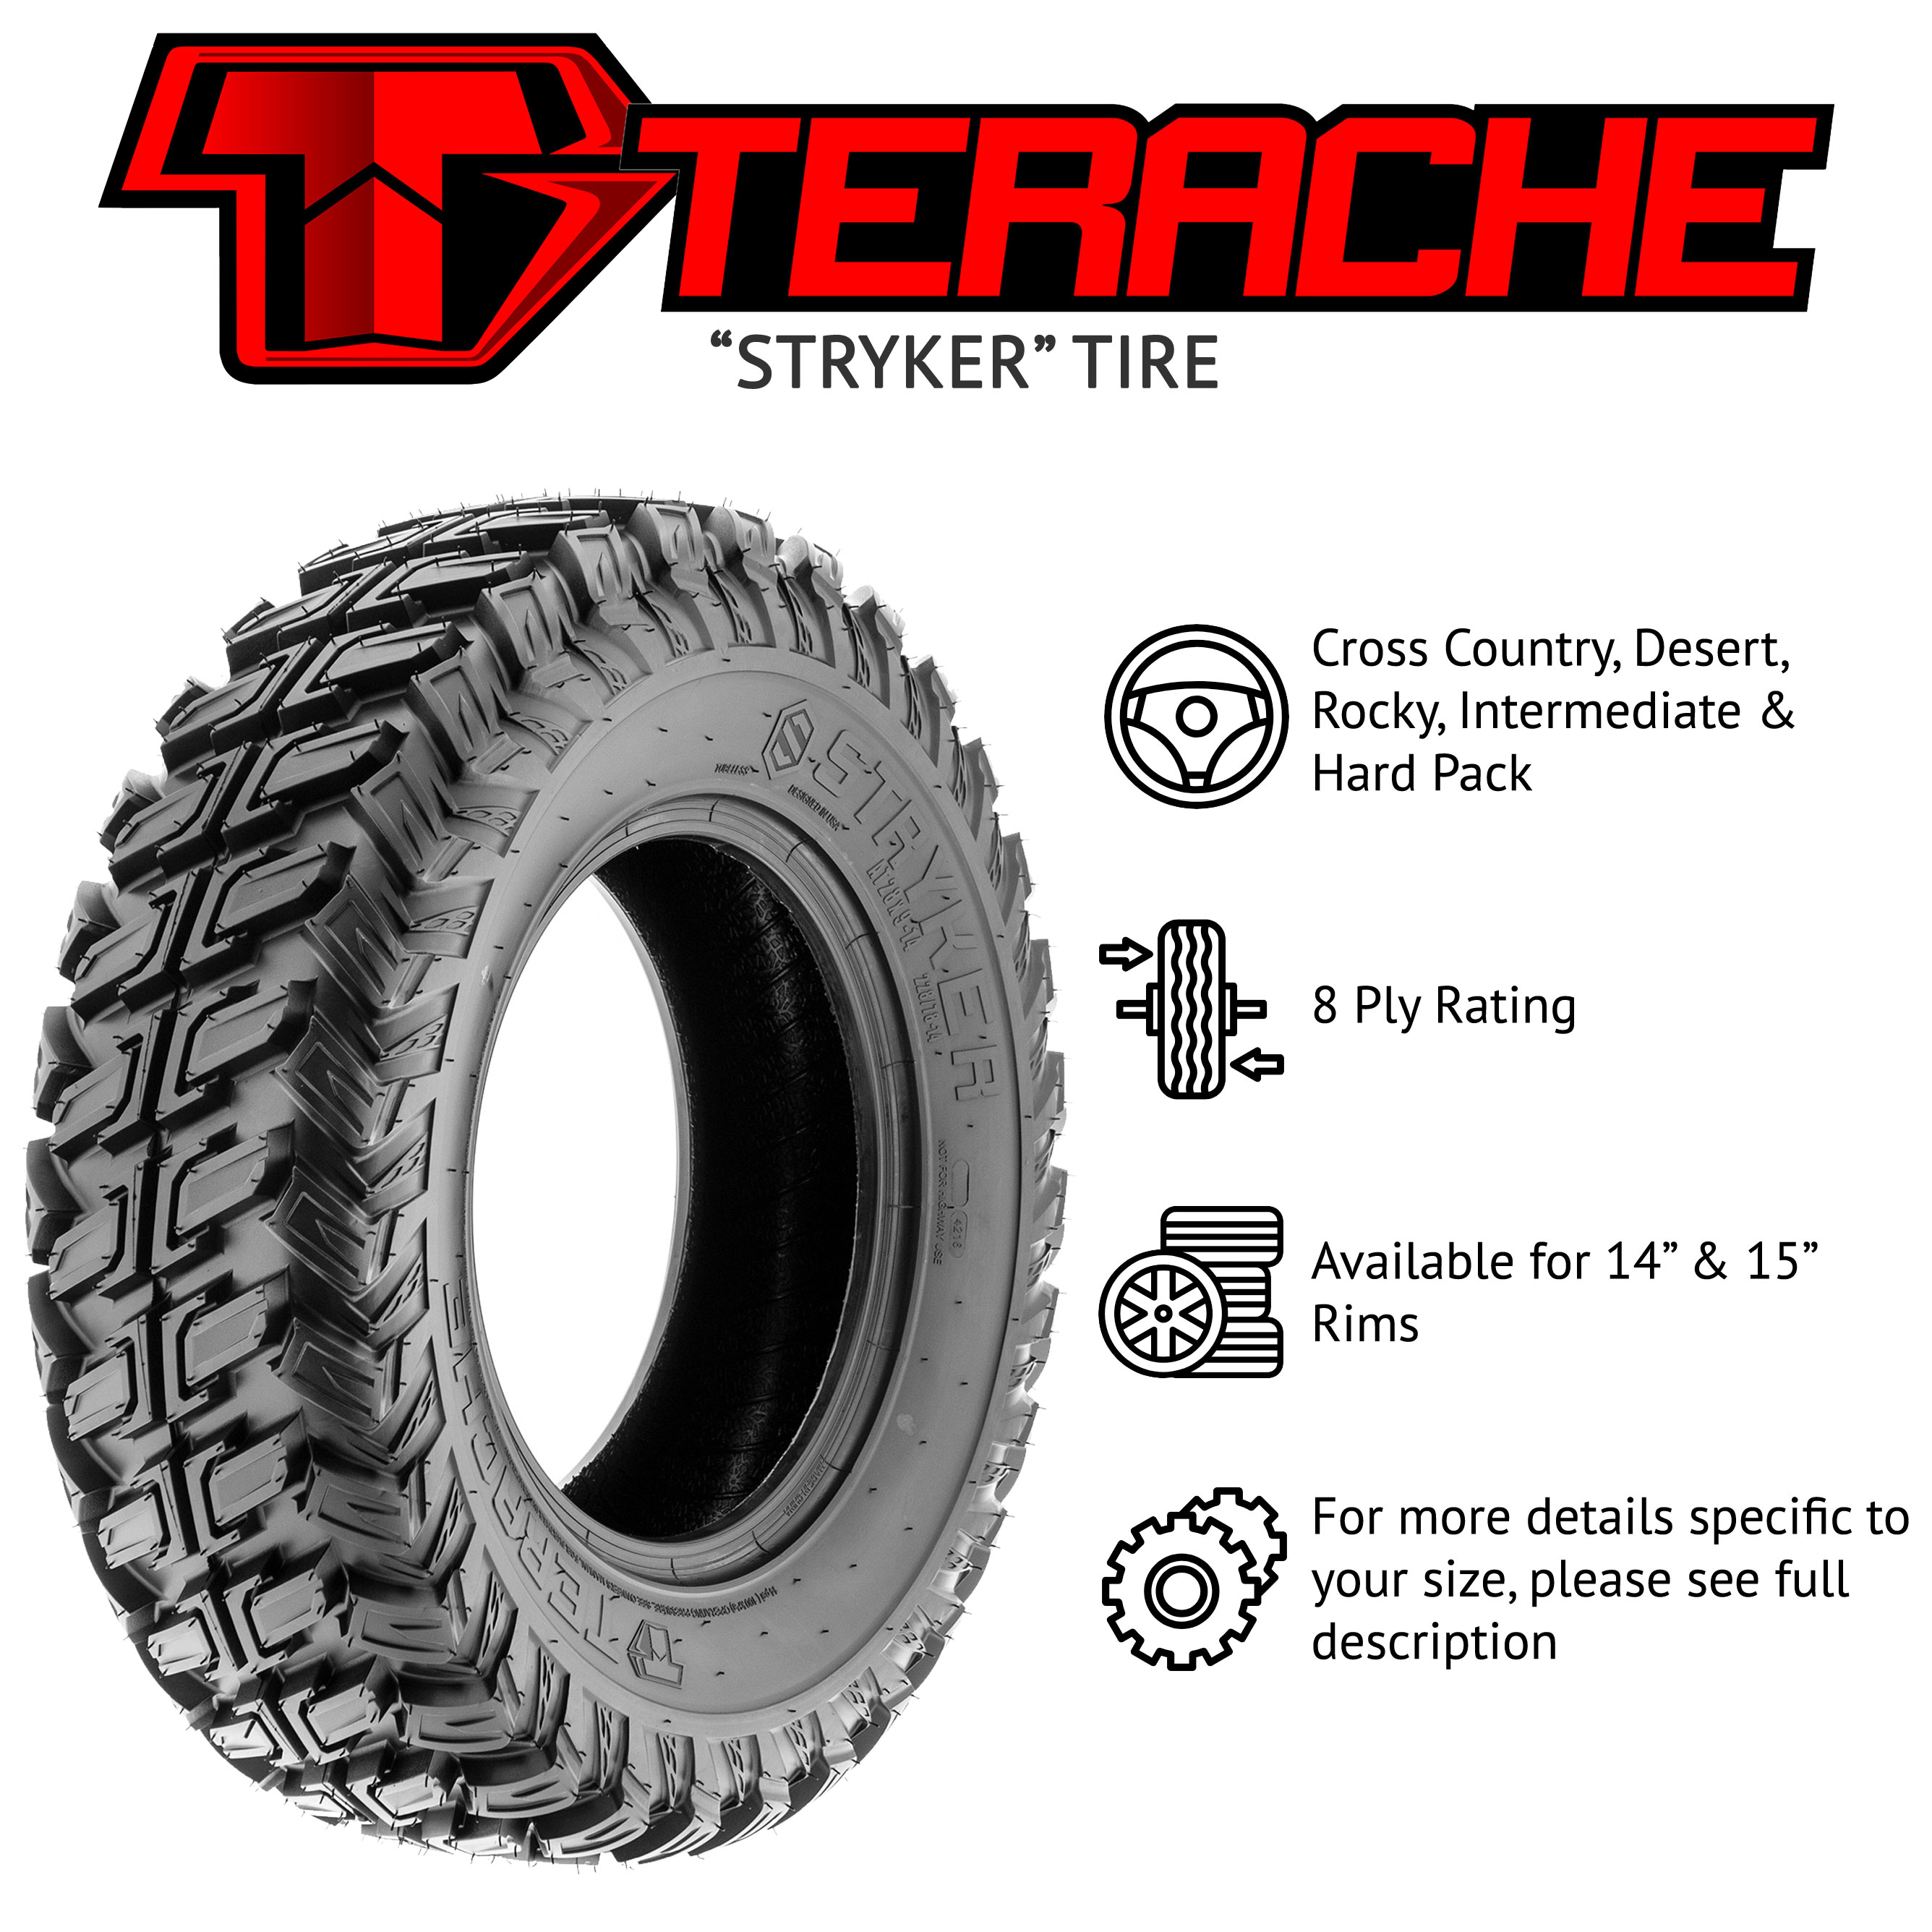 Terache 32x10r15 ATV UTV Tires 32x10x15 A/t 8 PR Stryker Set of 2 for